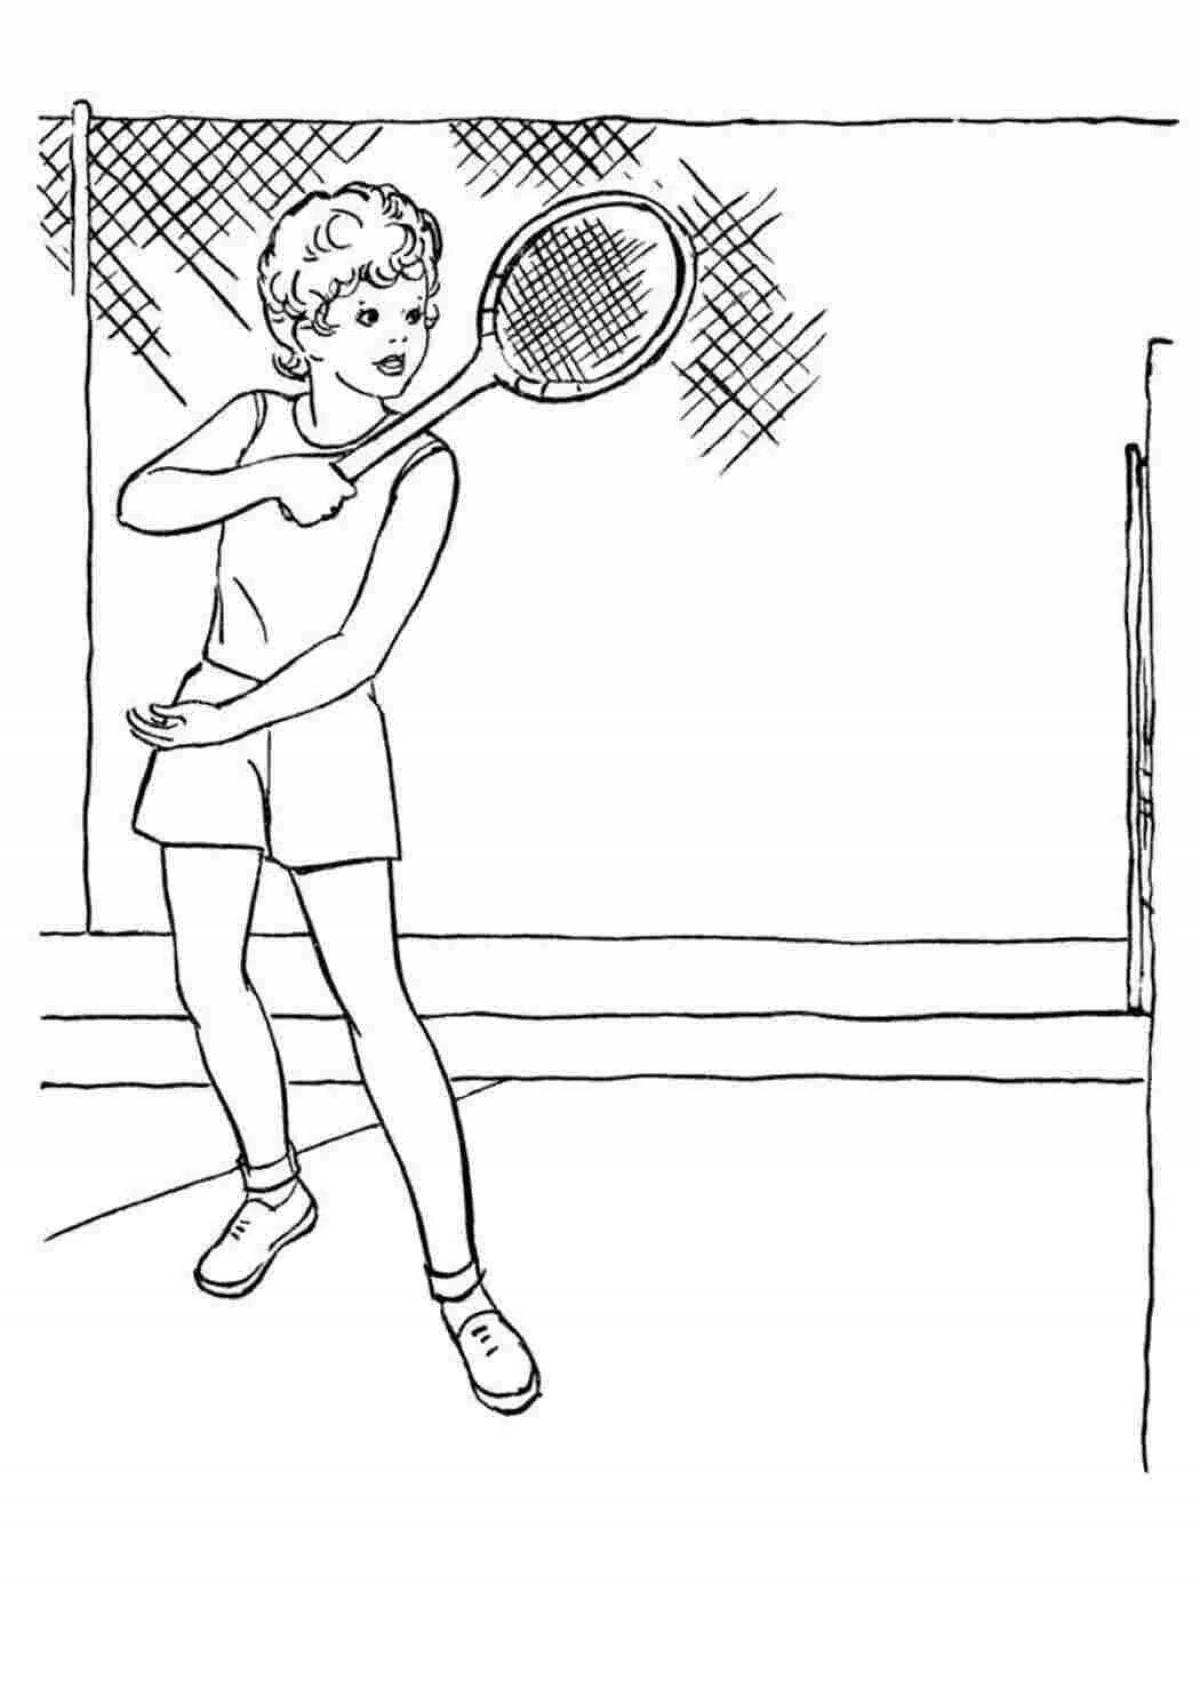 Joyful tennis coloring book for kids